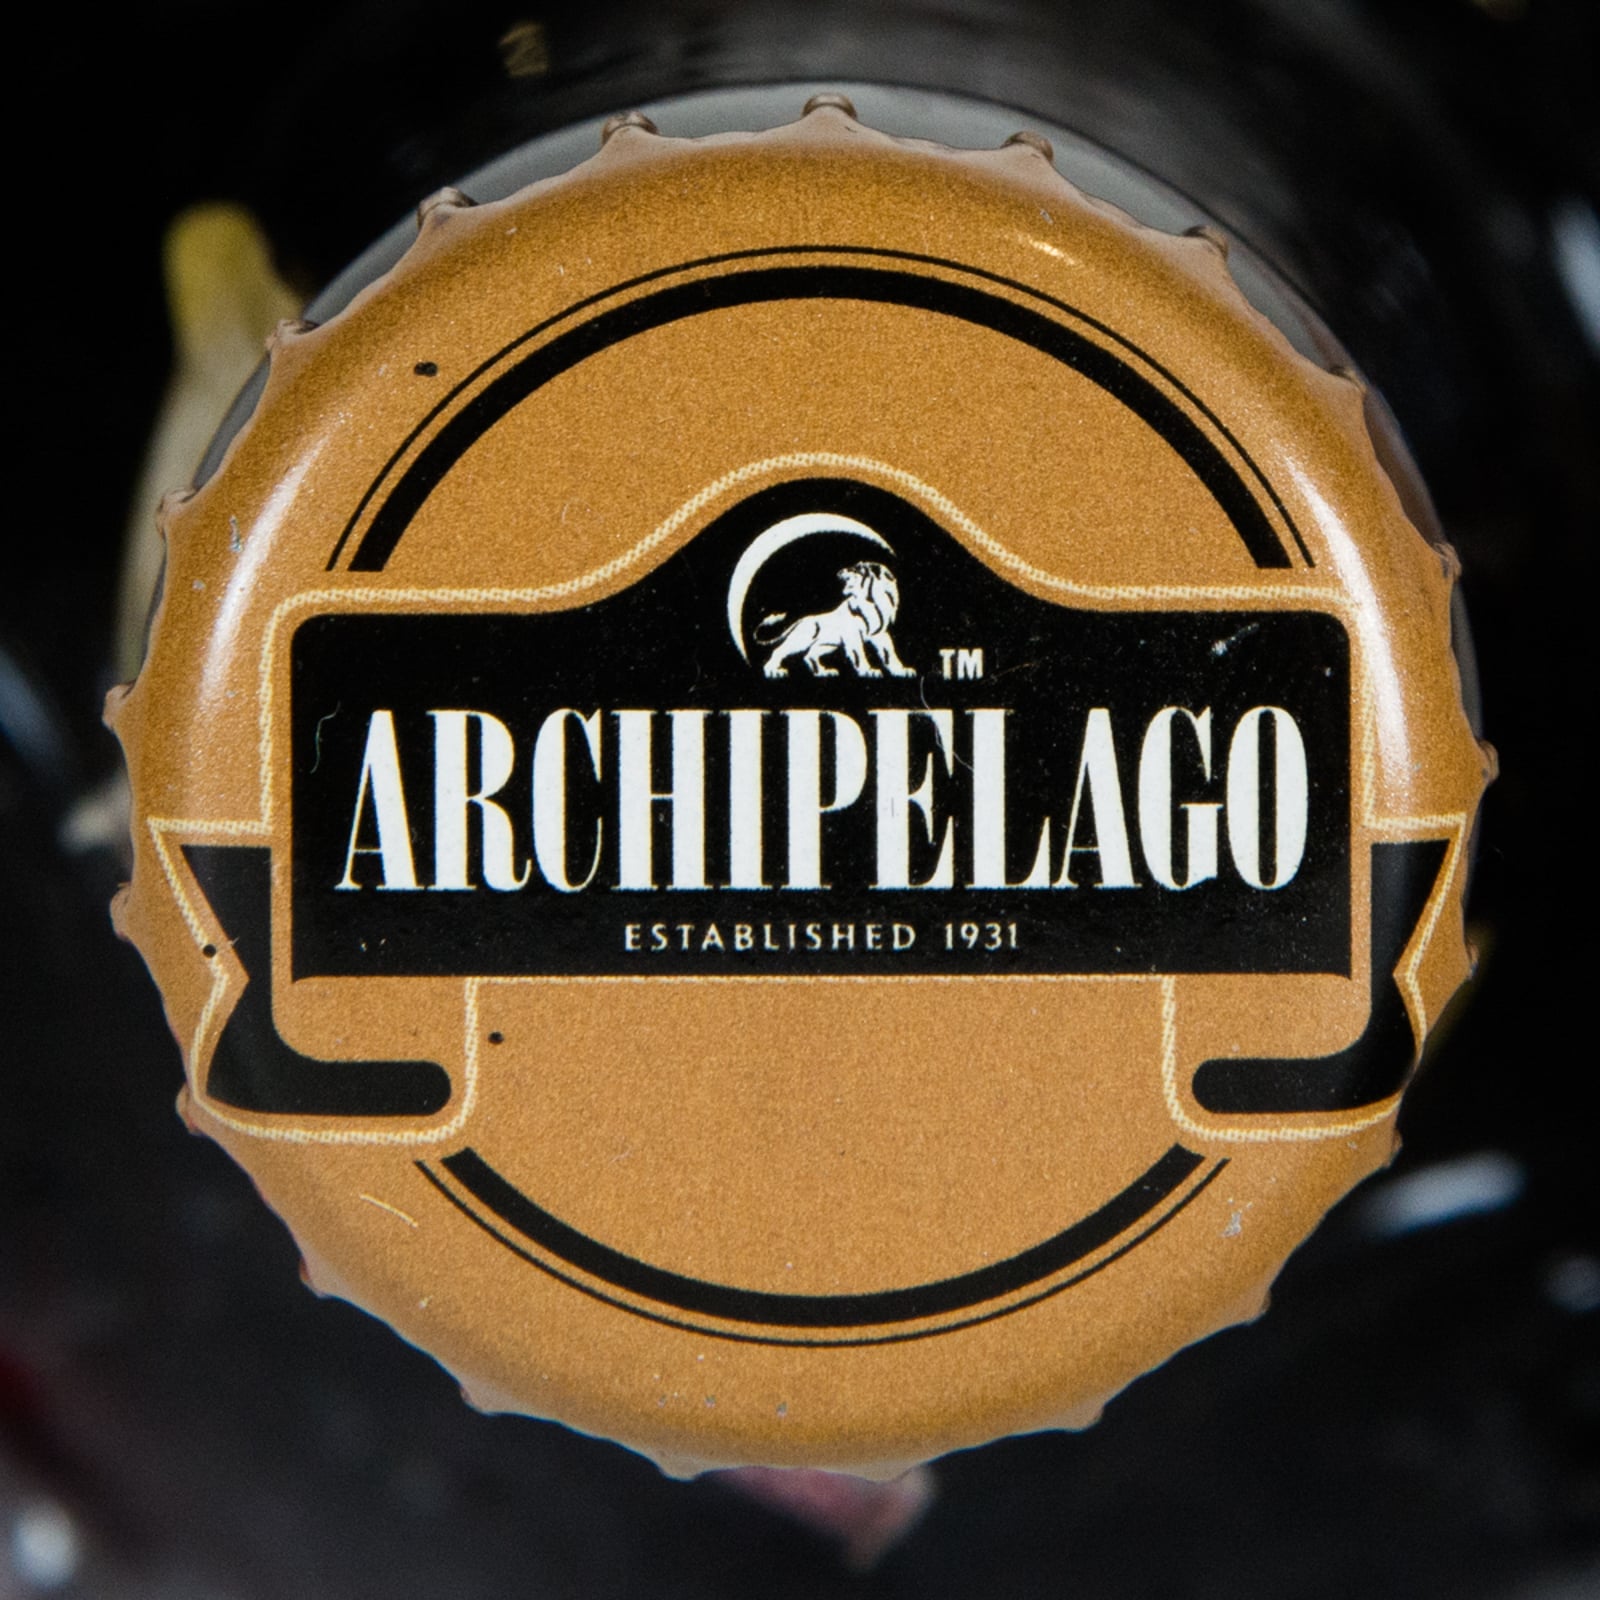 Archipelago Brewery Company's Straits Pale Bottle, 330 ml